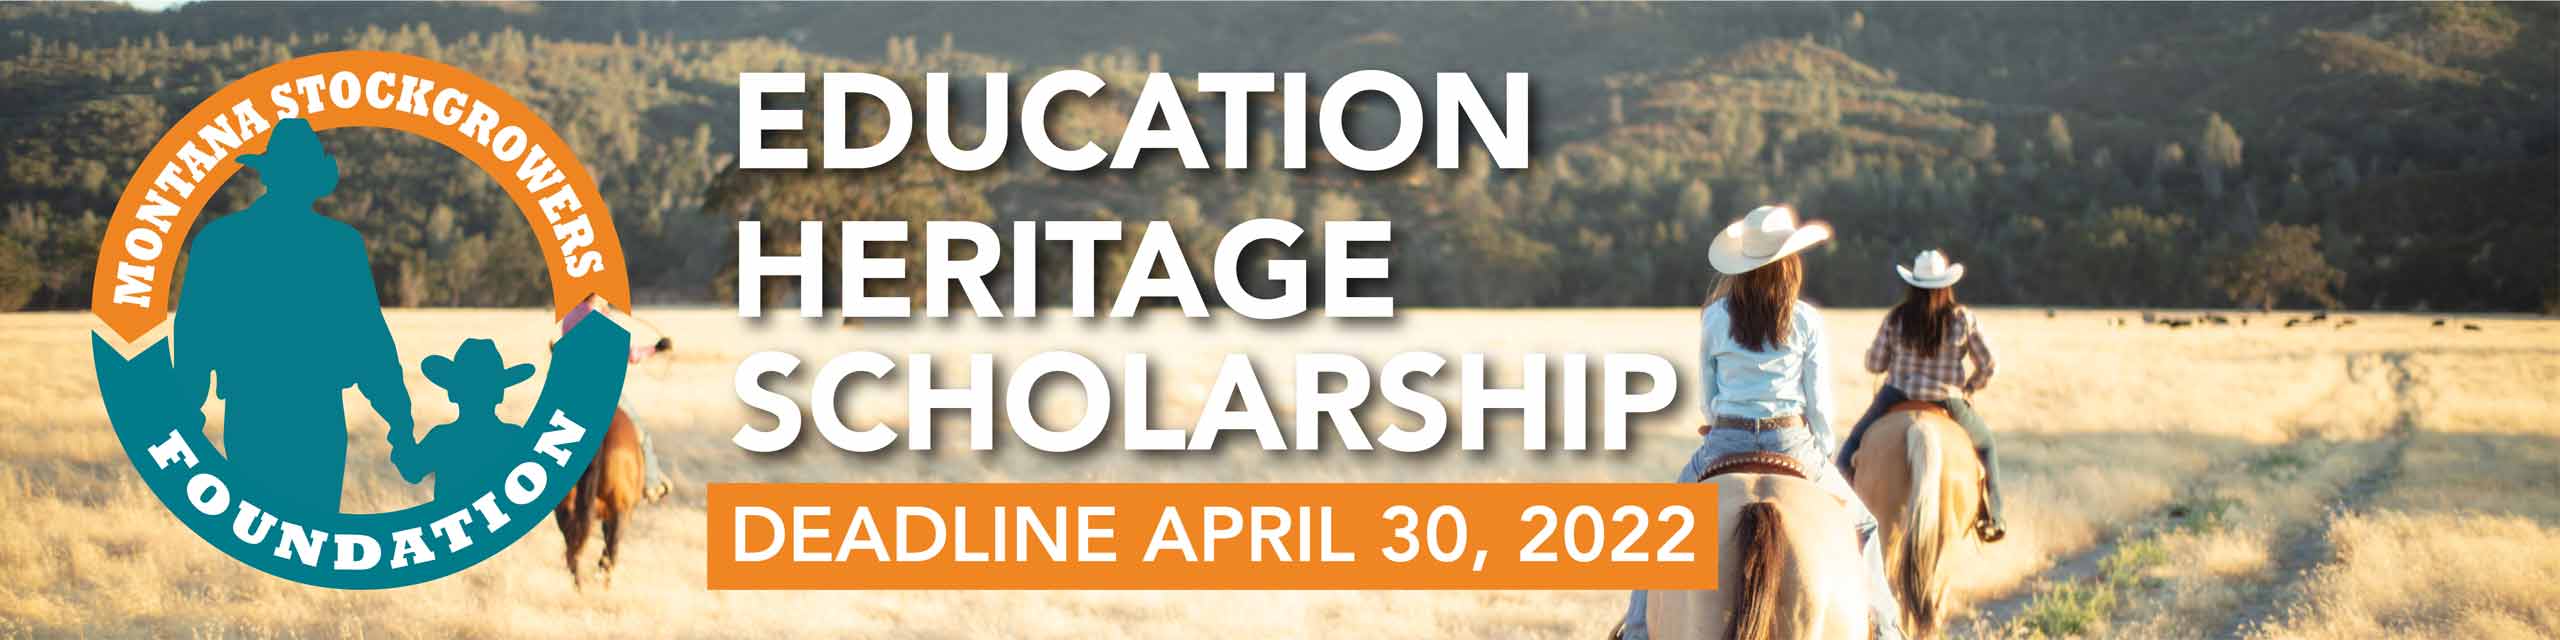 education heritage scholarship header